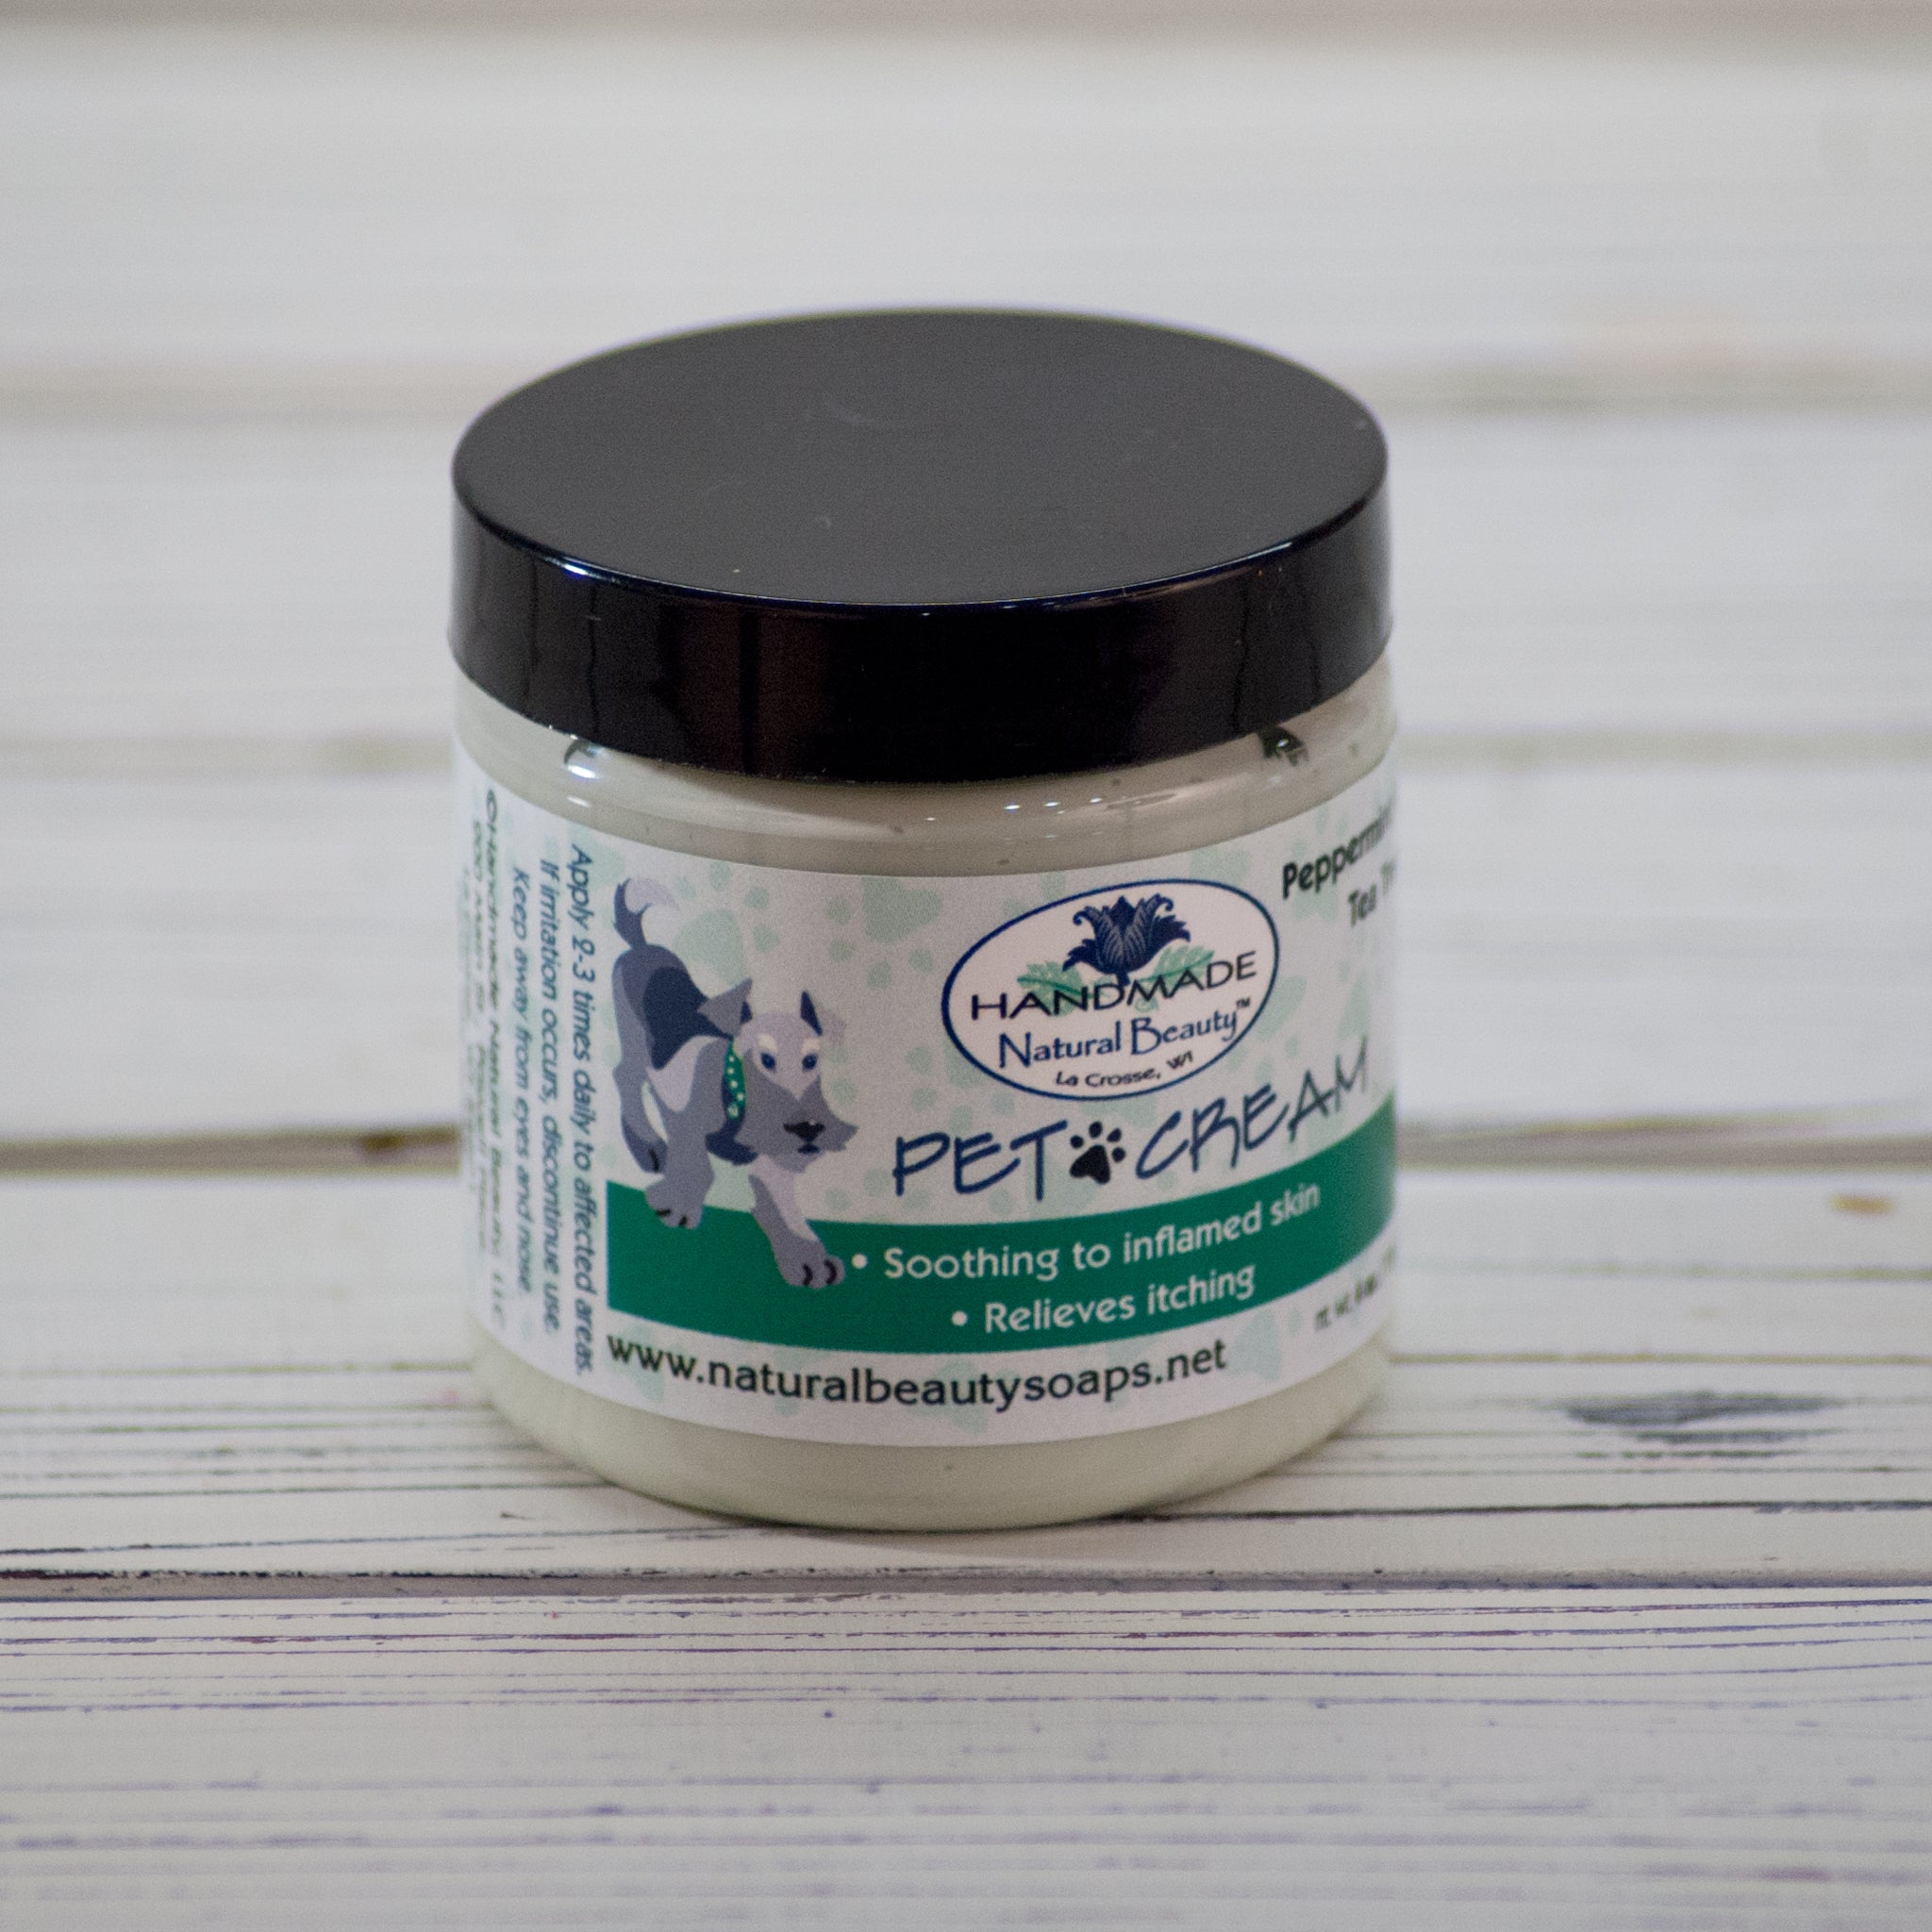 Natural Pet Care | Peppermint Pet Cream